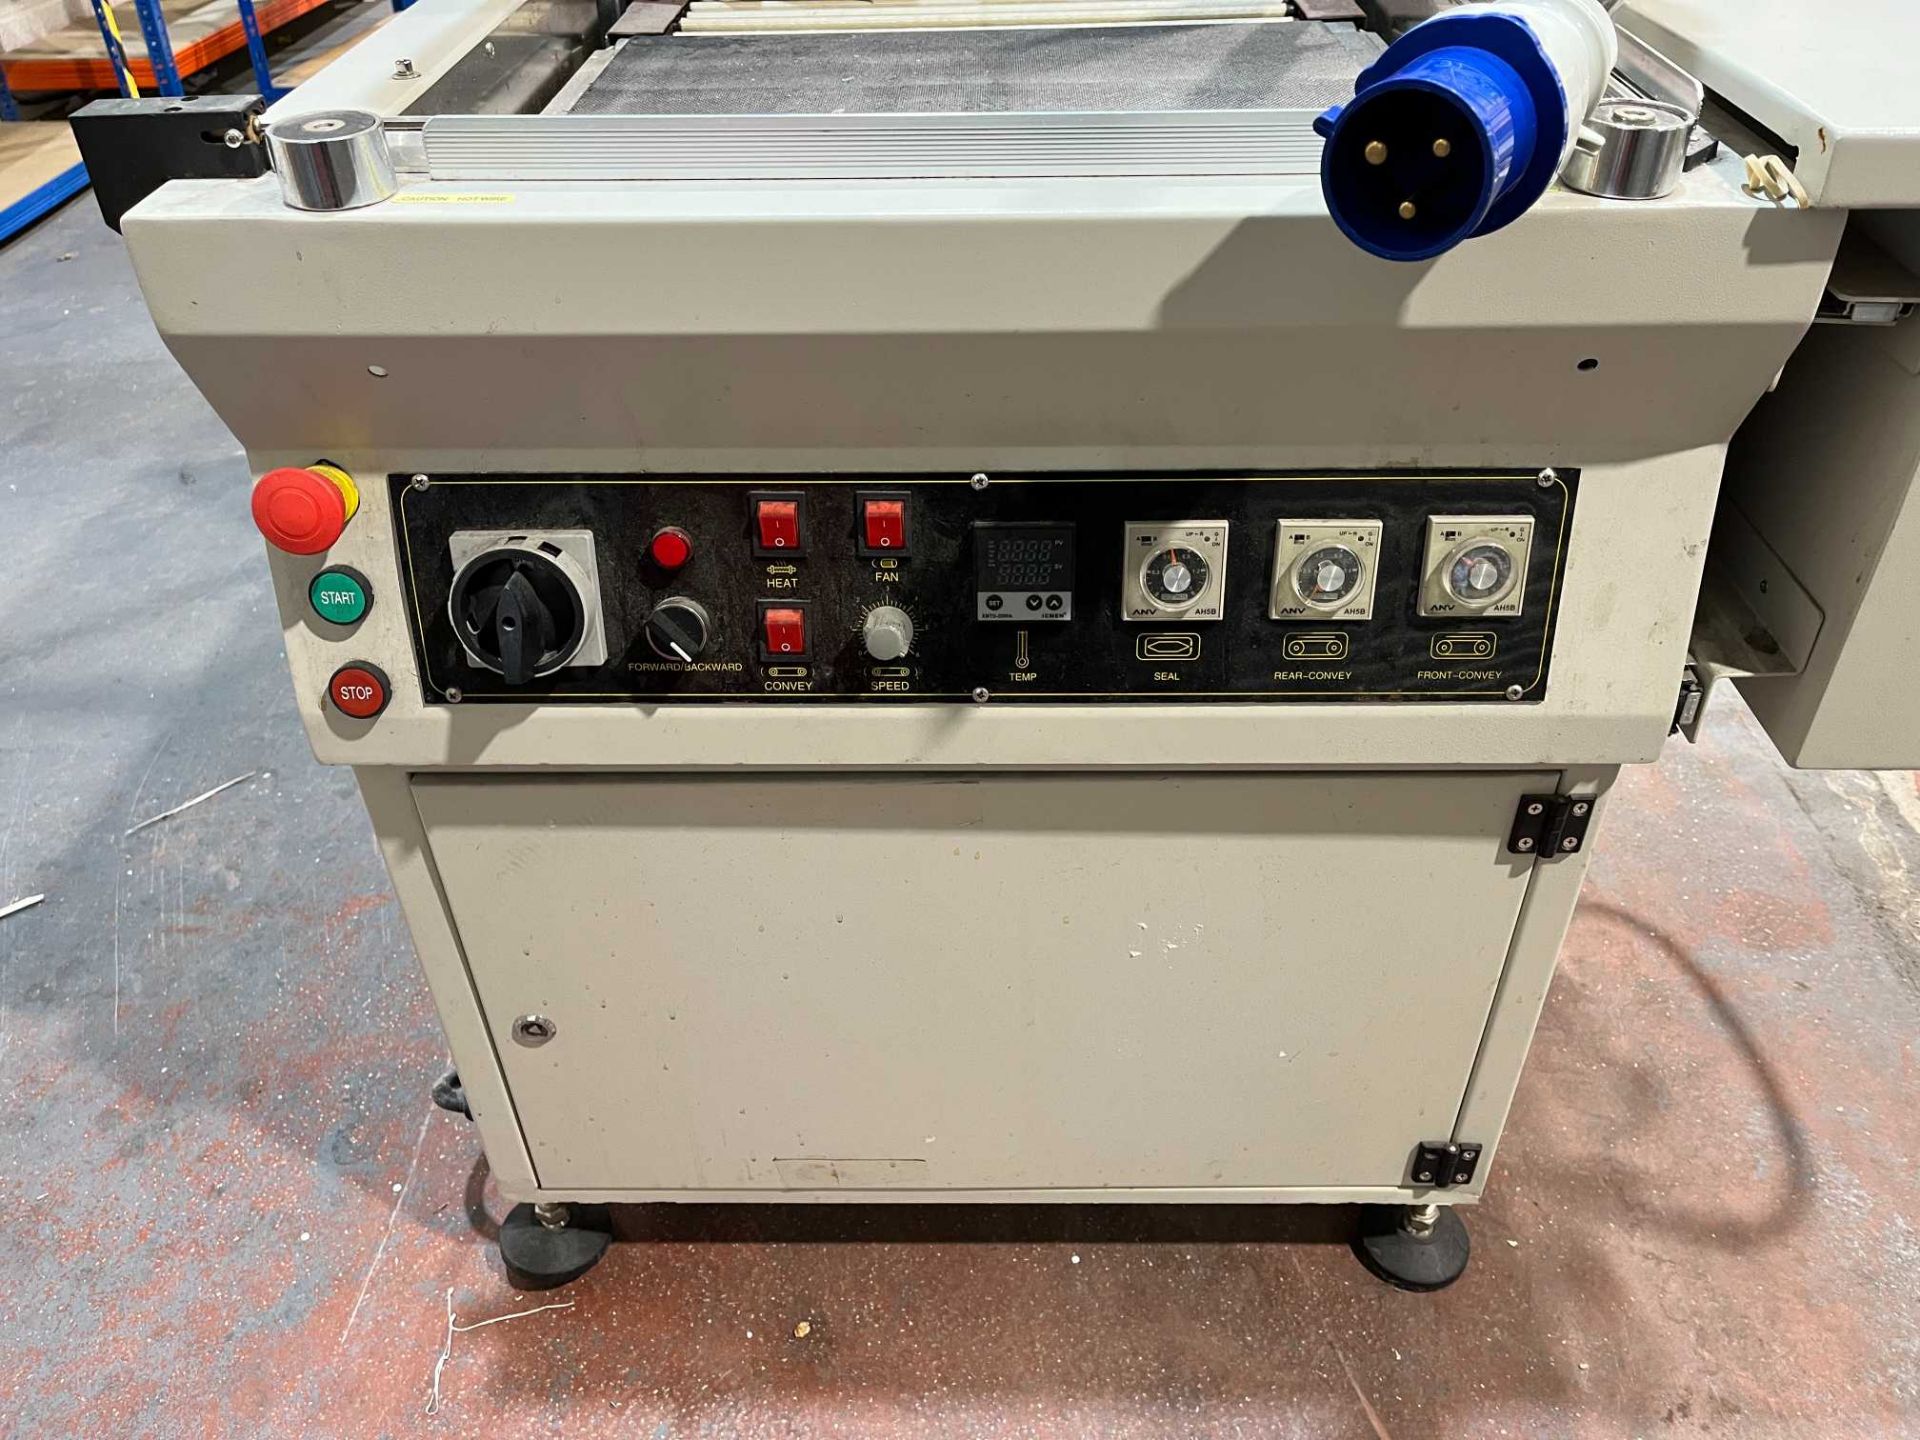 Hualian Compact Seal shrink packaging machine; Serial No: 1656119050101 (2019) - Bild 2 aus 4